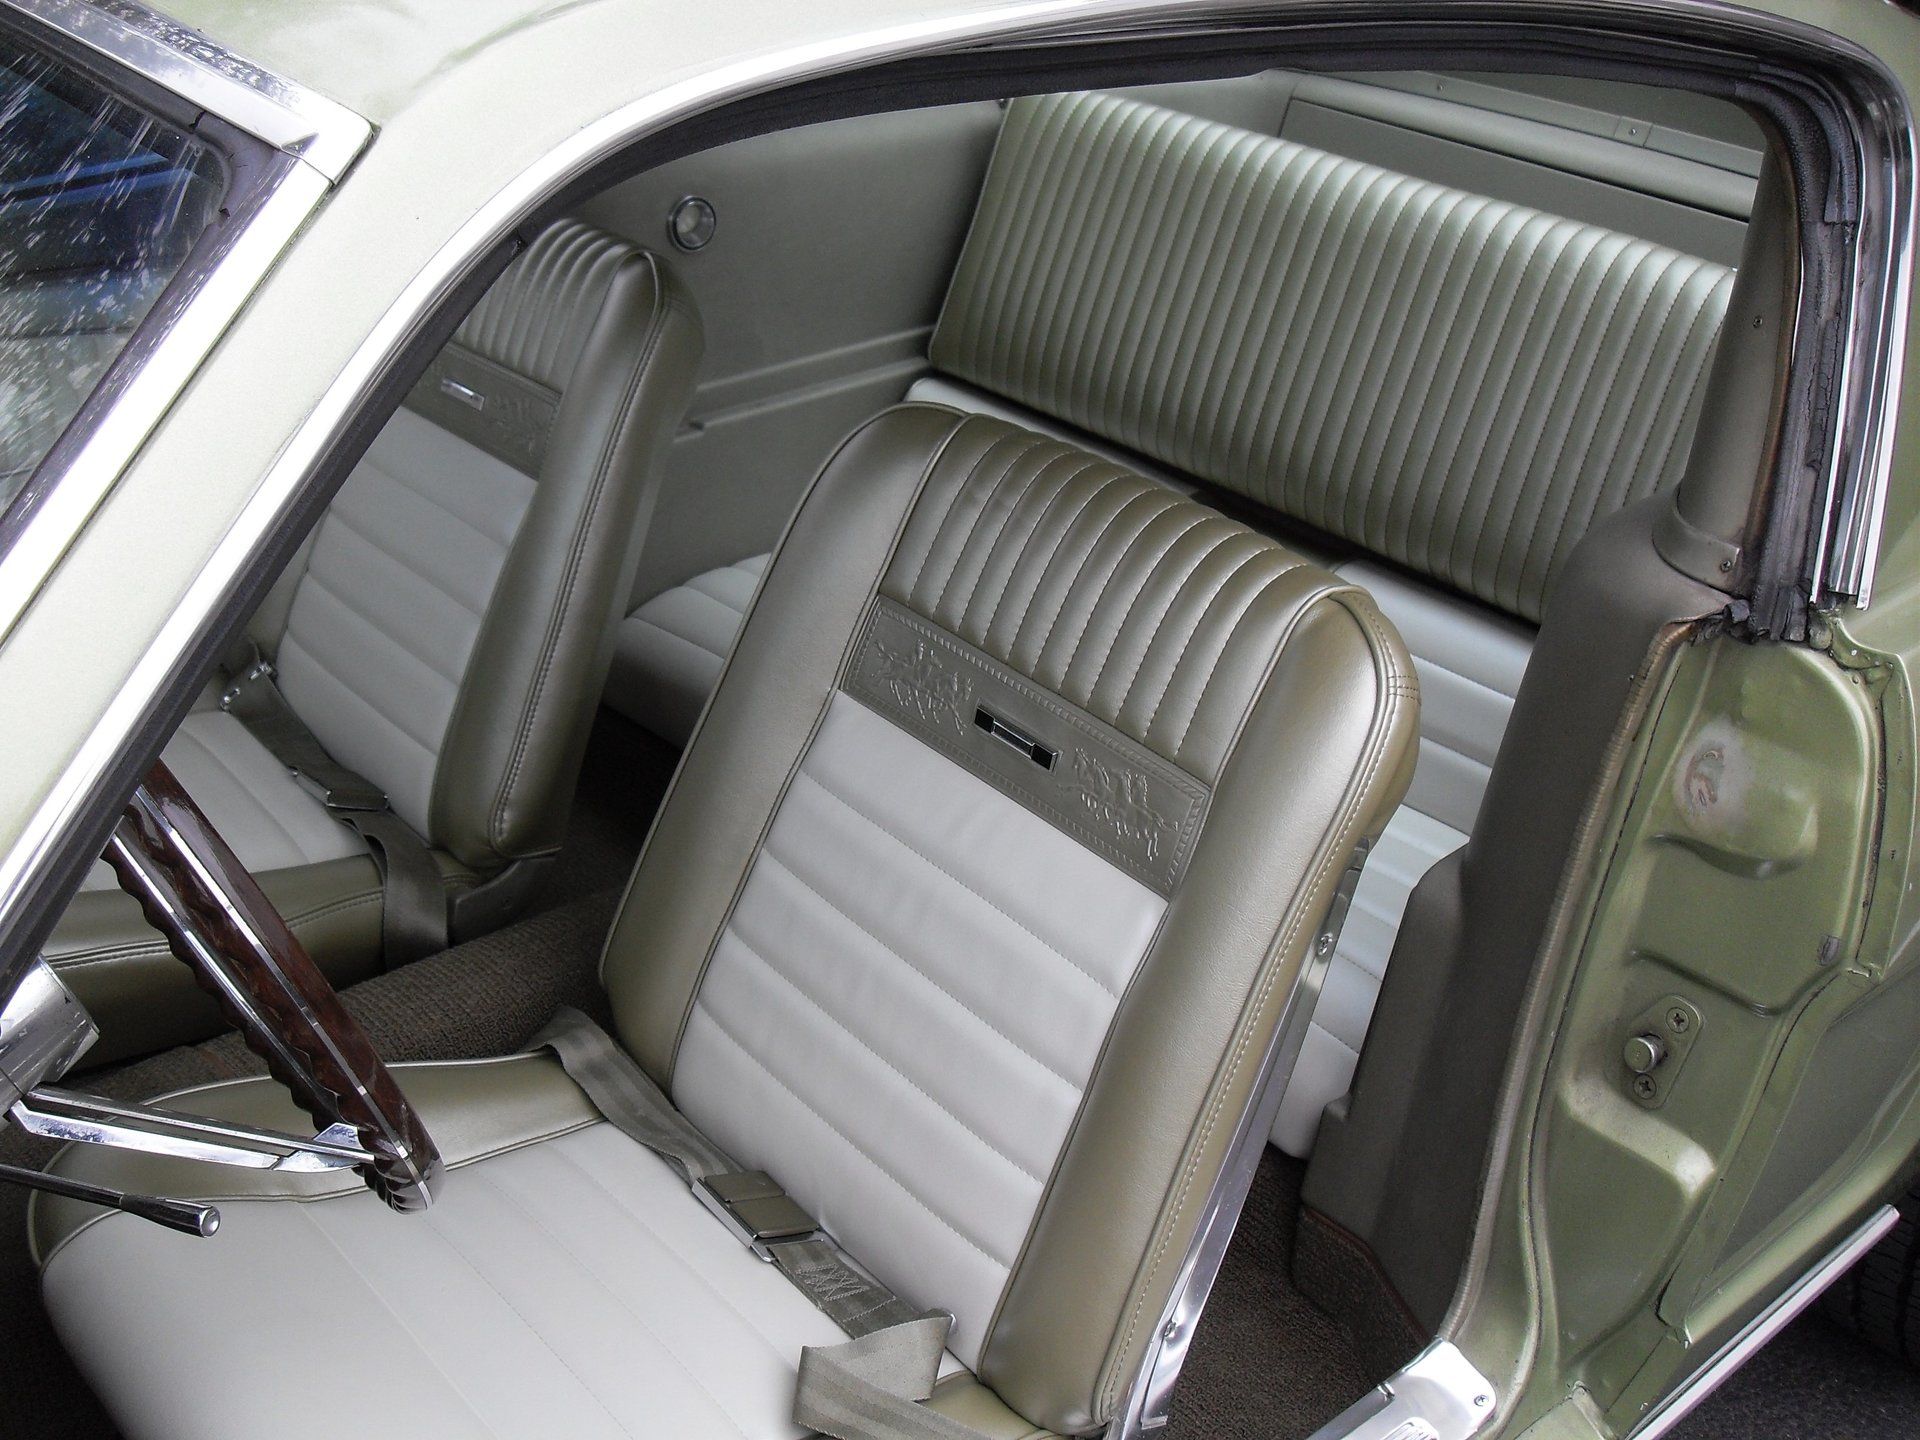 Auto interior upholstery